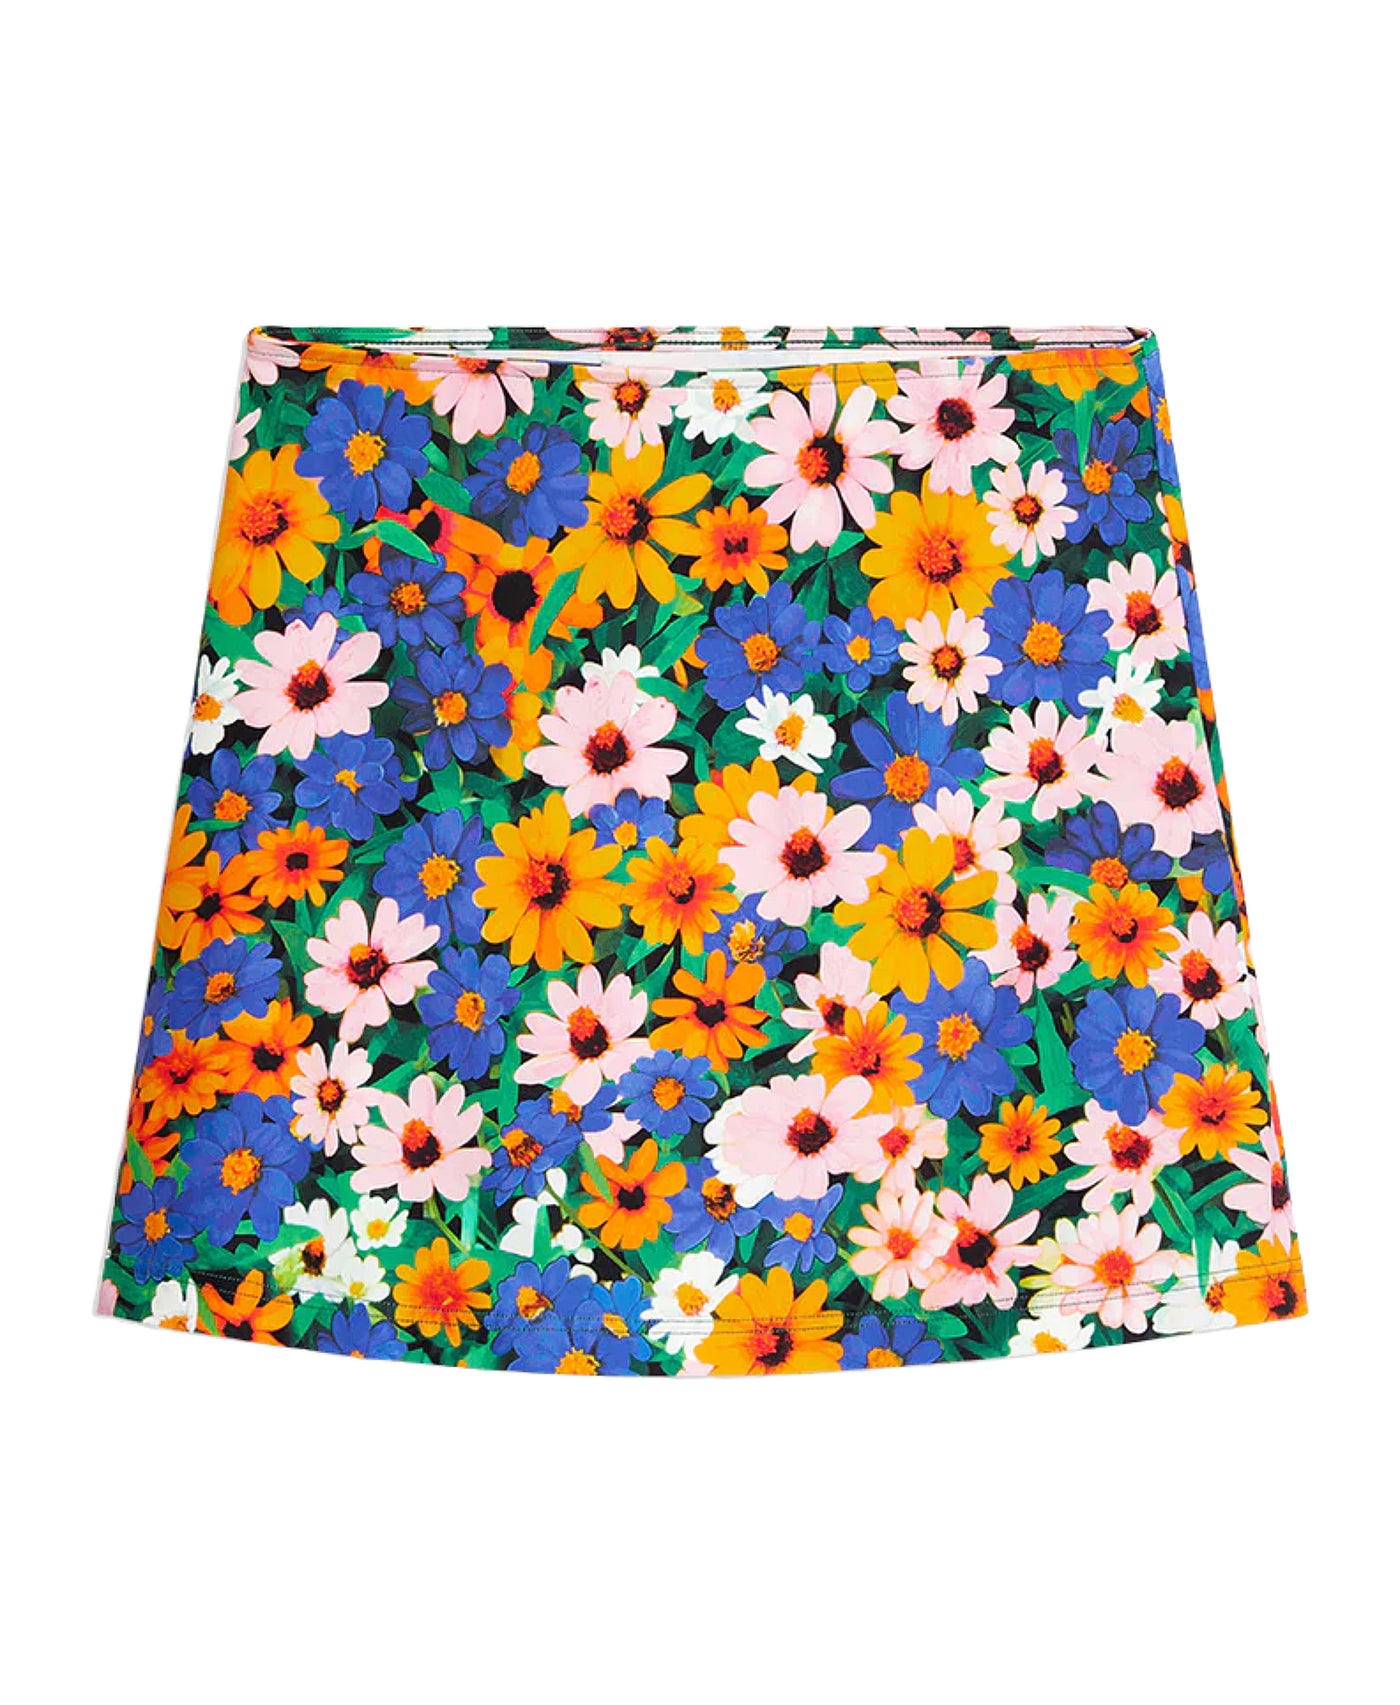 Wildflower Print Skirt- Swim Cover-Up image 1